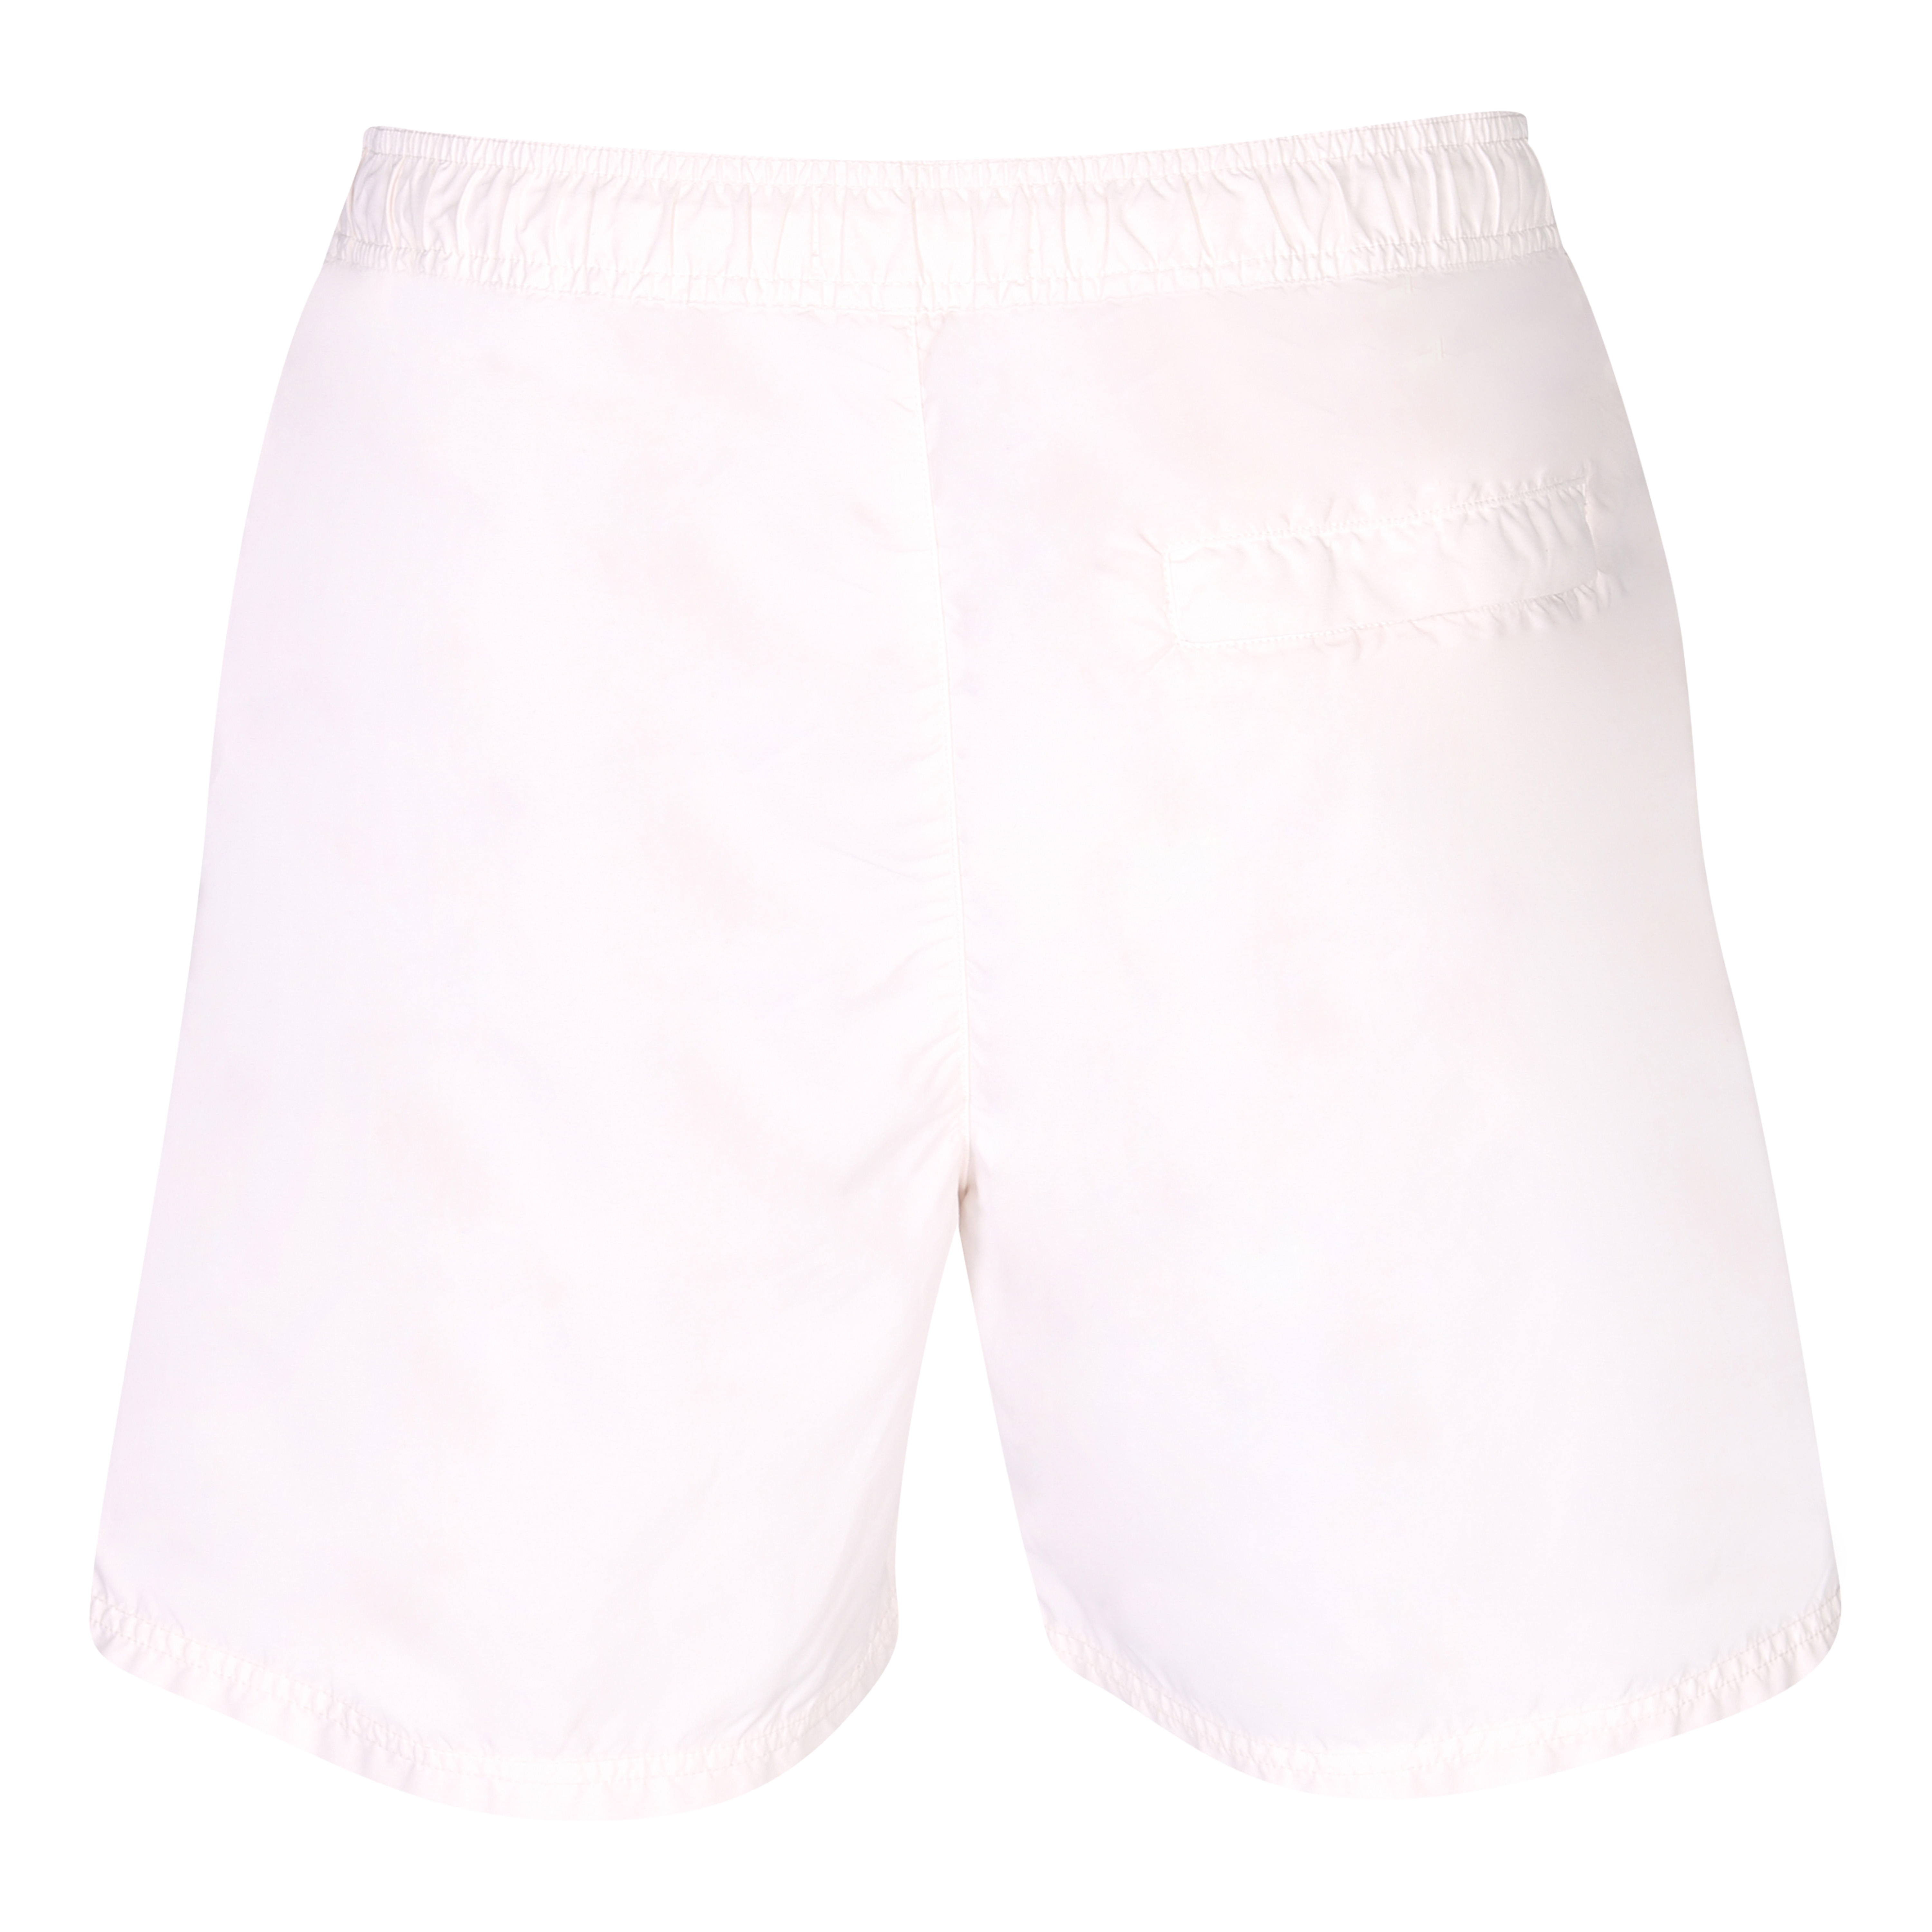 Stone Island Swim Shorts in Light Pink XL